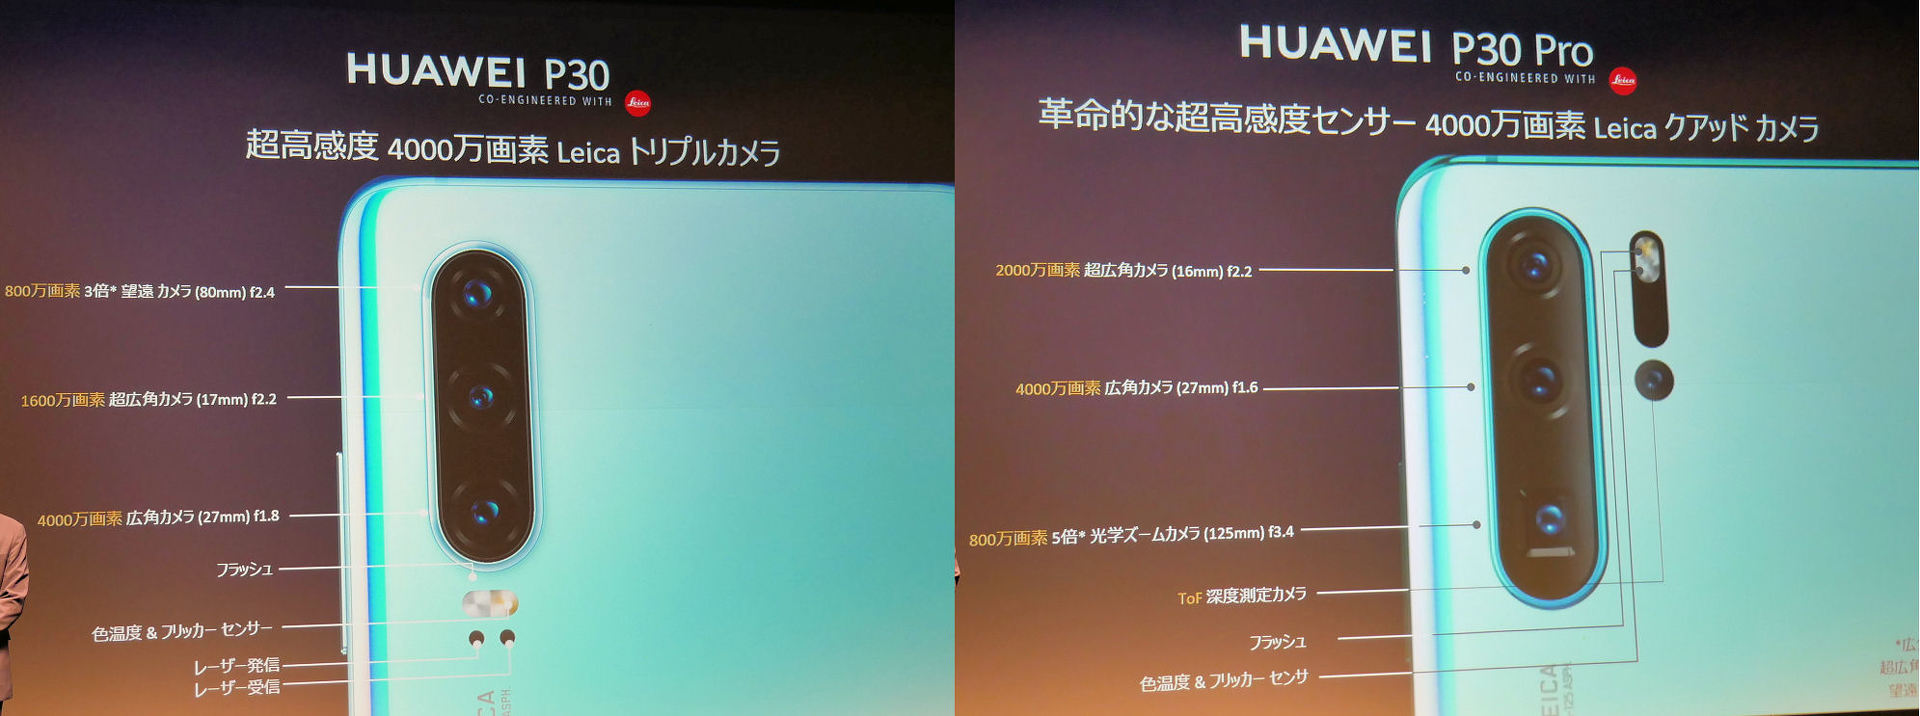 「HUAWEI P30 Pro」のSIMフリー版は「現時点で予定なし」 - ITmedia Mobile